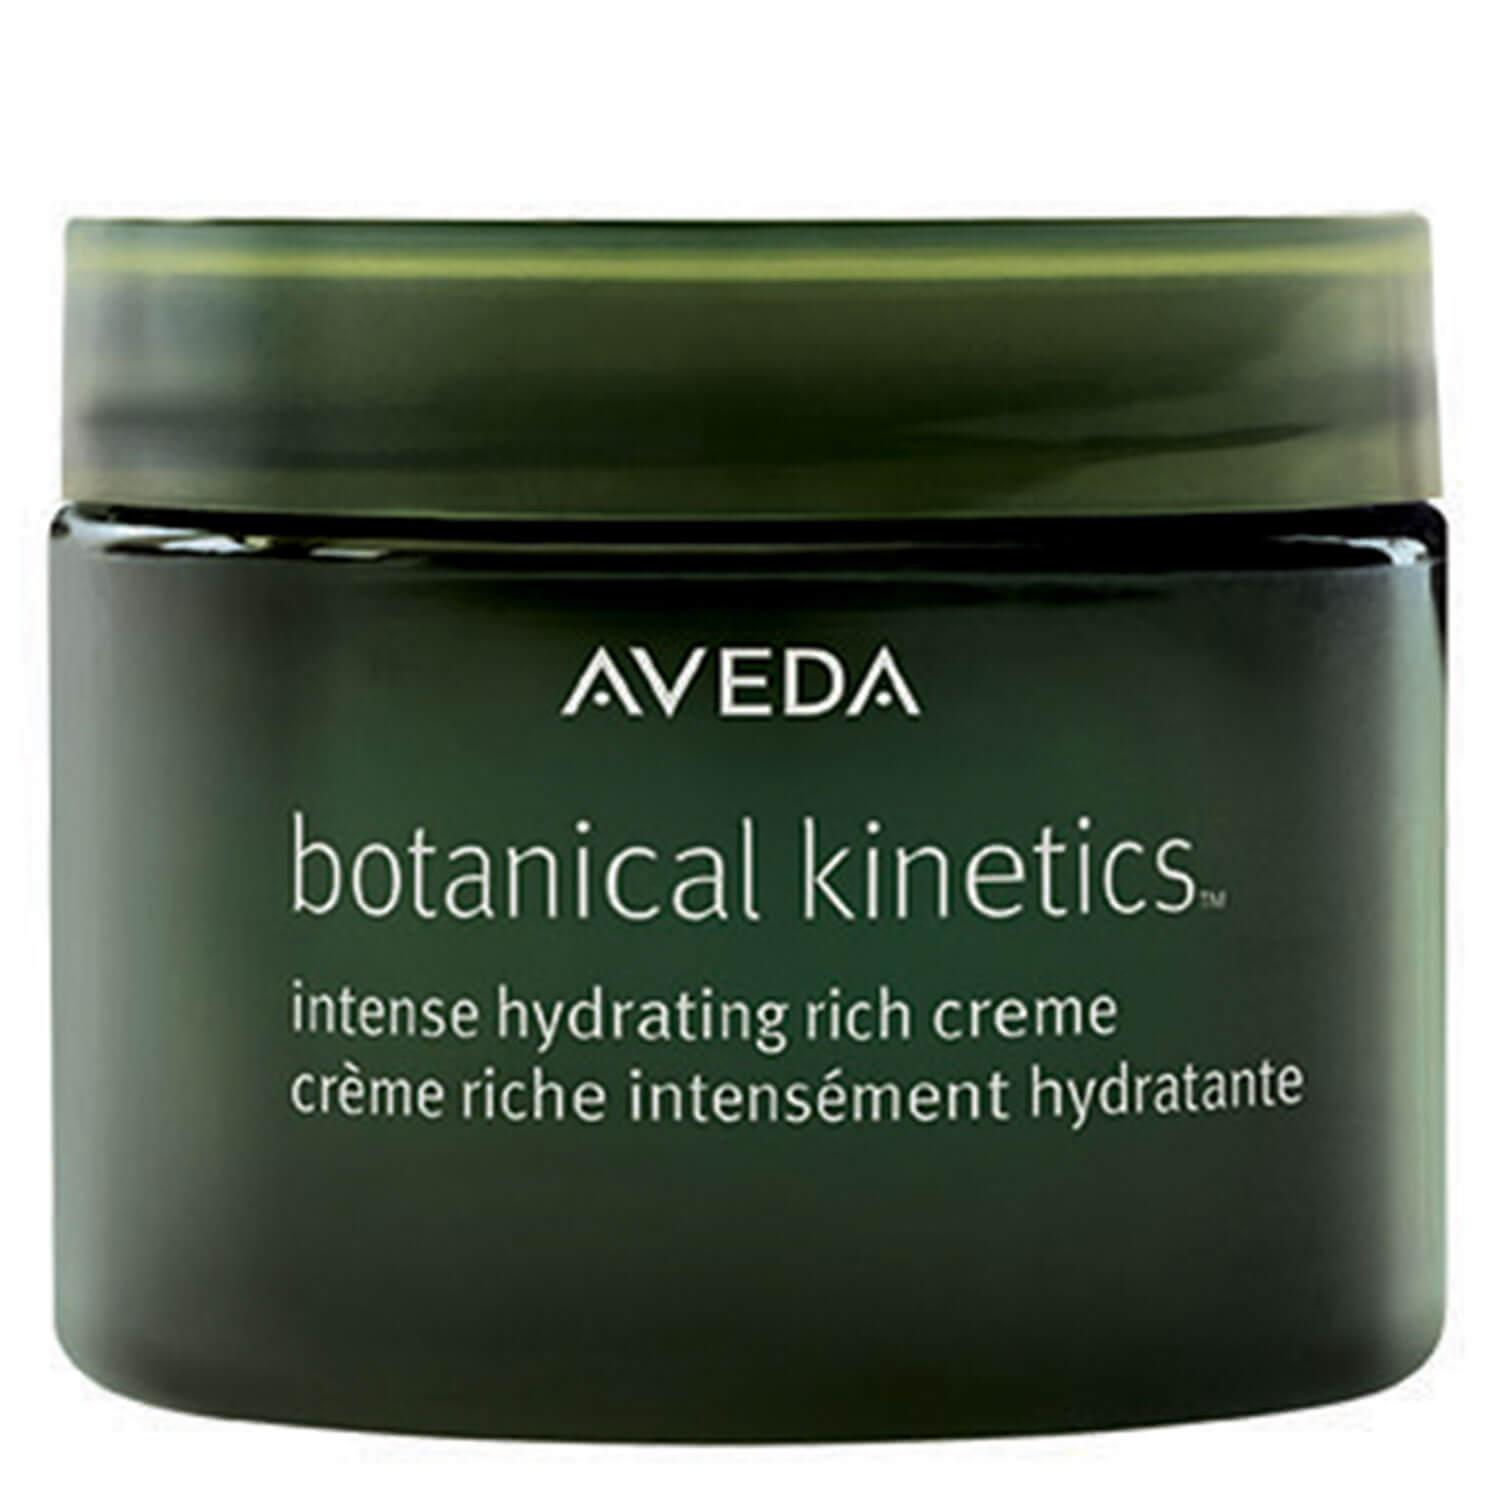 botanical kinetics - intense hydrating rich creme